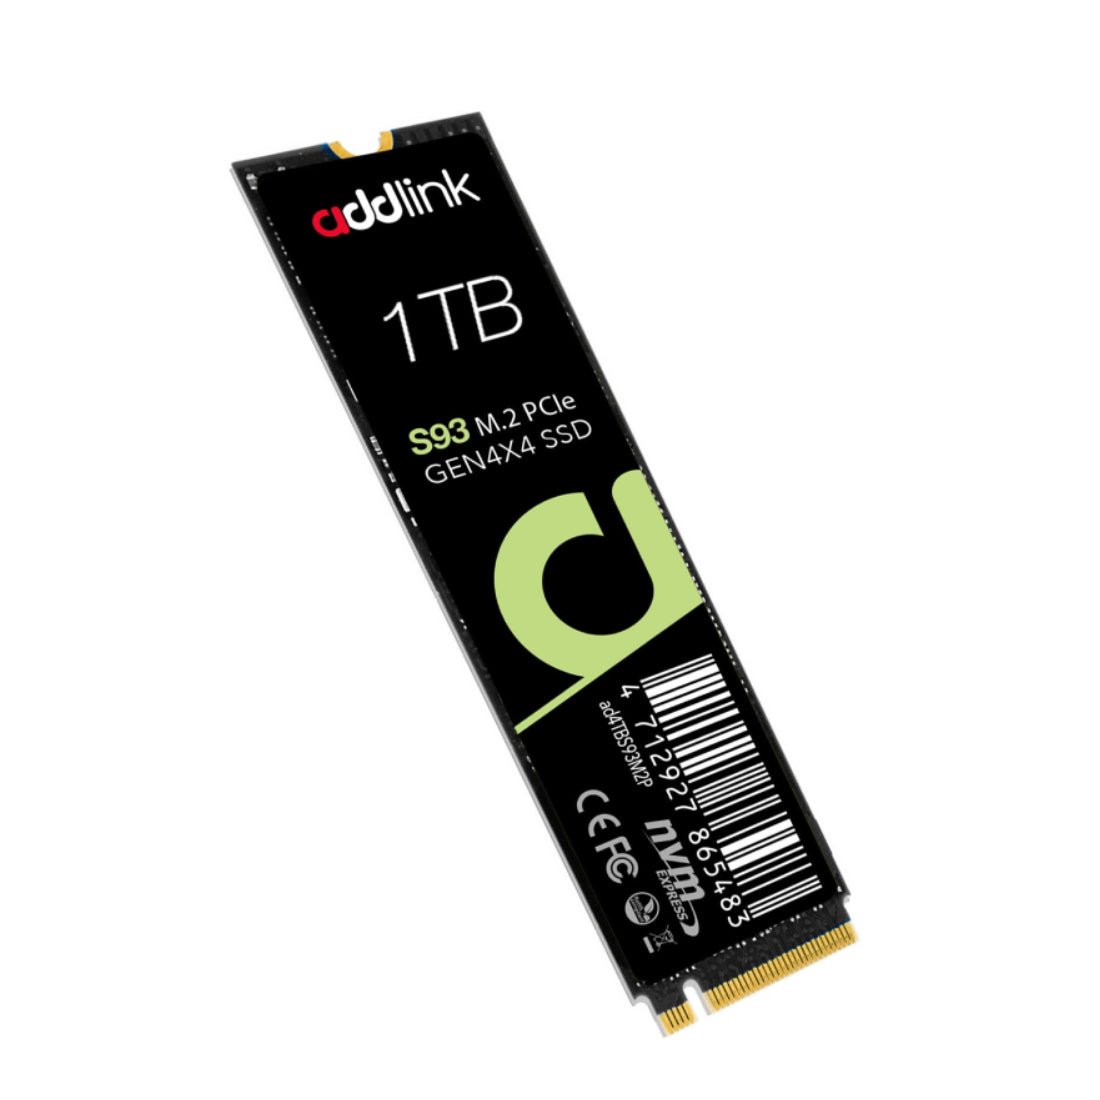 Addlink S93 1TB Gen4 7200MB/s NVMe M.2 Internal SSD - مساحة تخزين - Store 974 | ستور ٩٧٤